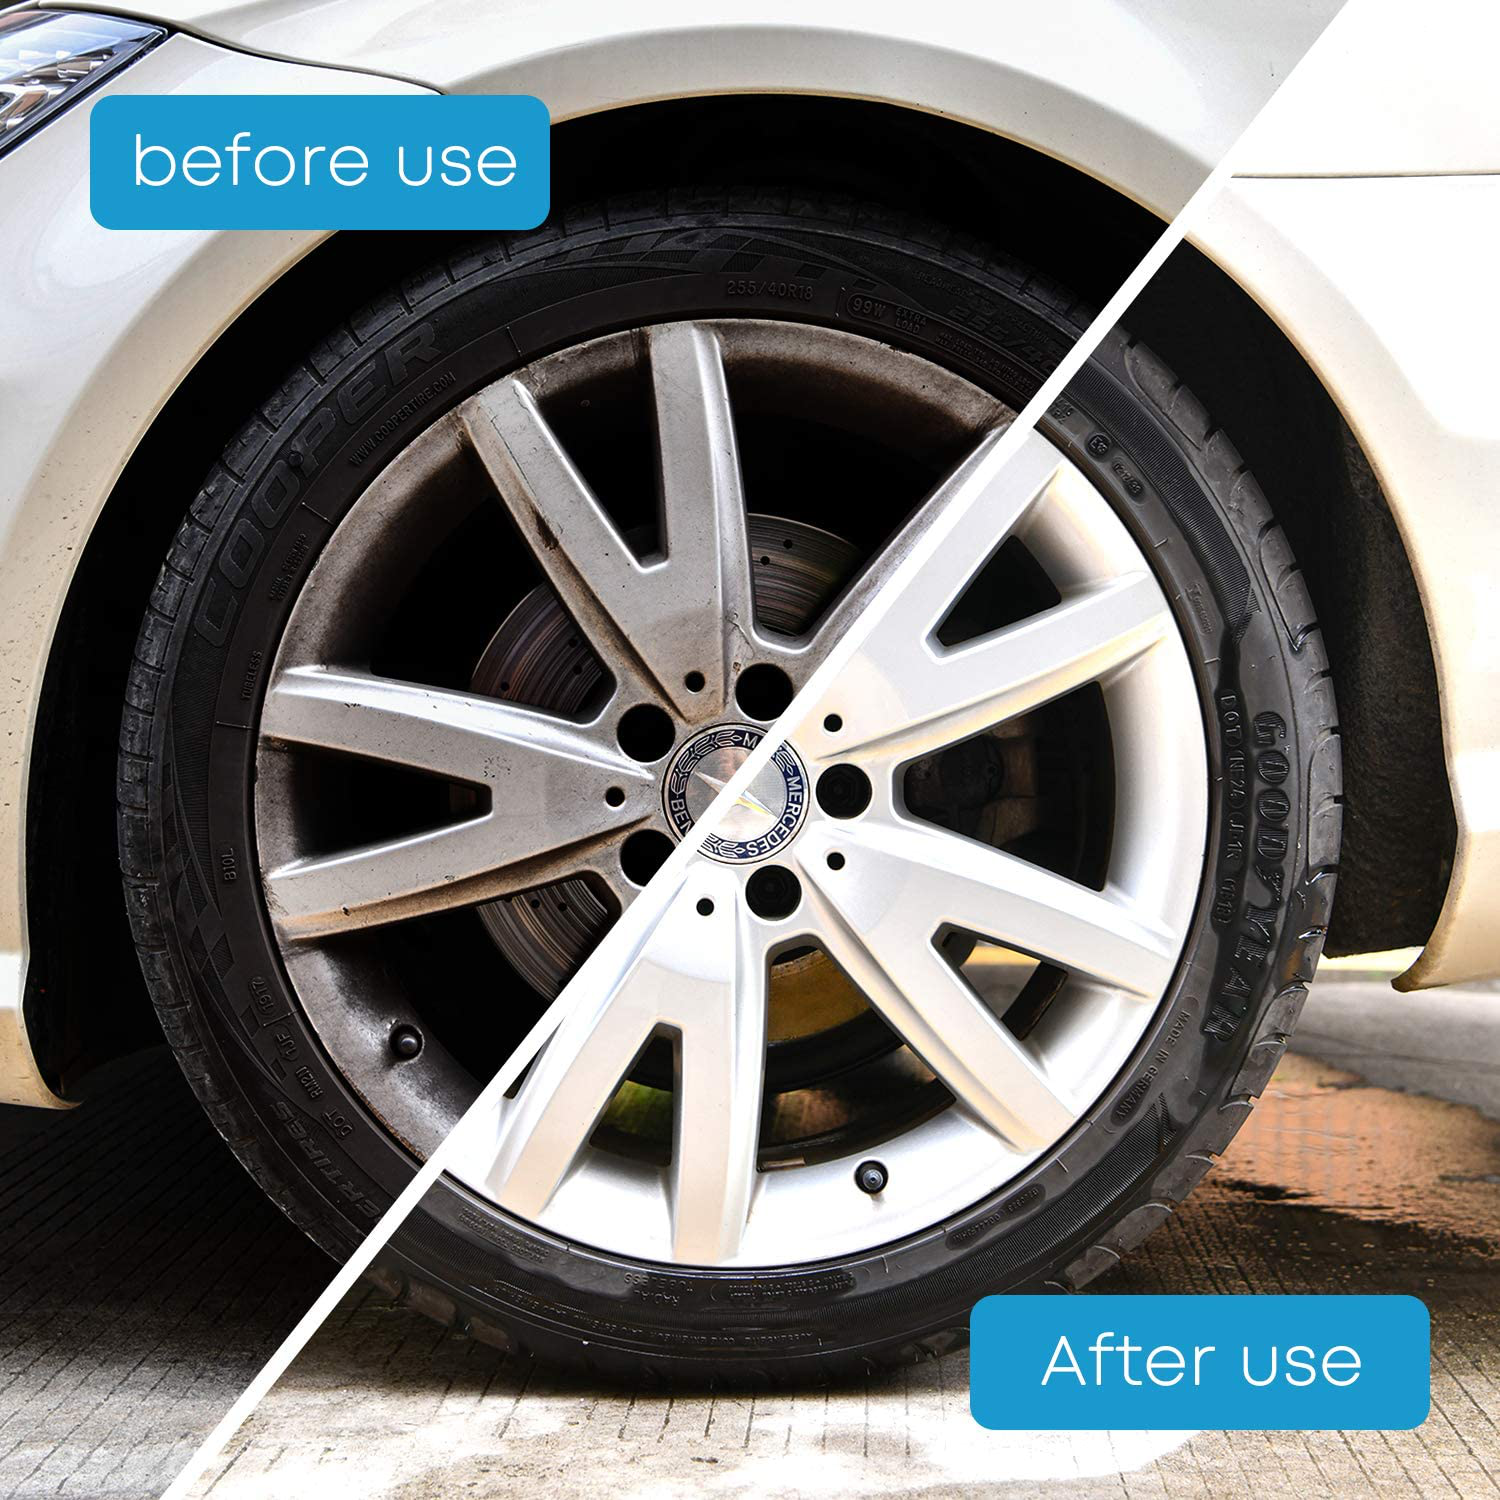 Kohree 9Pcs Wheel Tire Brush Set for Cleaning Wheels, Detail Car Wash Wheel Cleaner Rim Brushes Kit for Washing Tires Vehicle Auto Engine